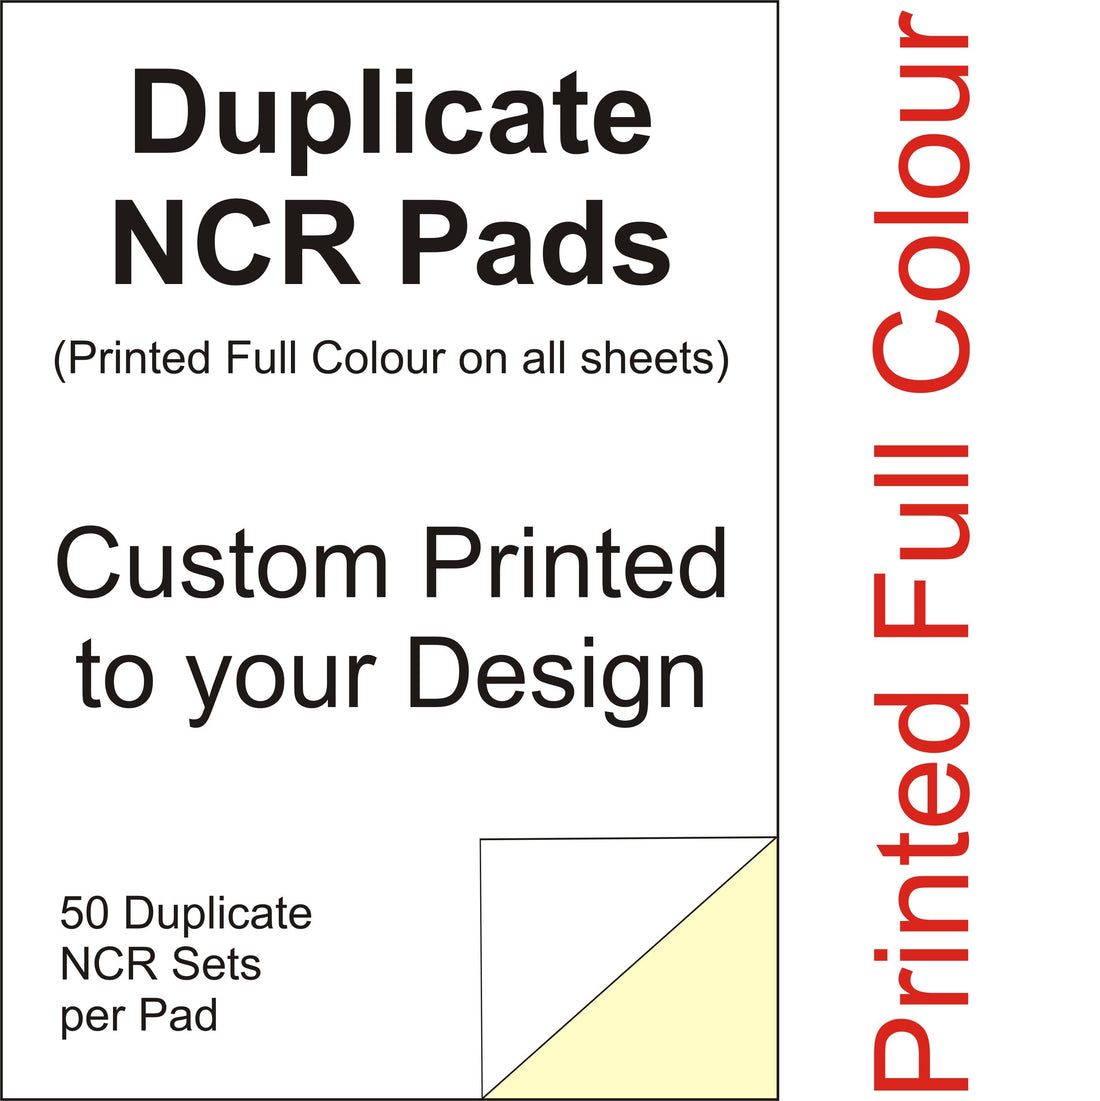 Duplicate NCR Pads £10.00 Discount Order Online